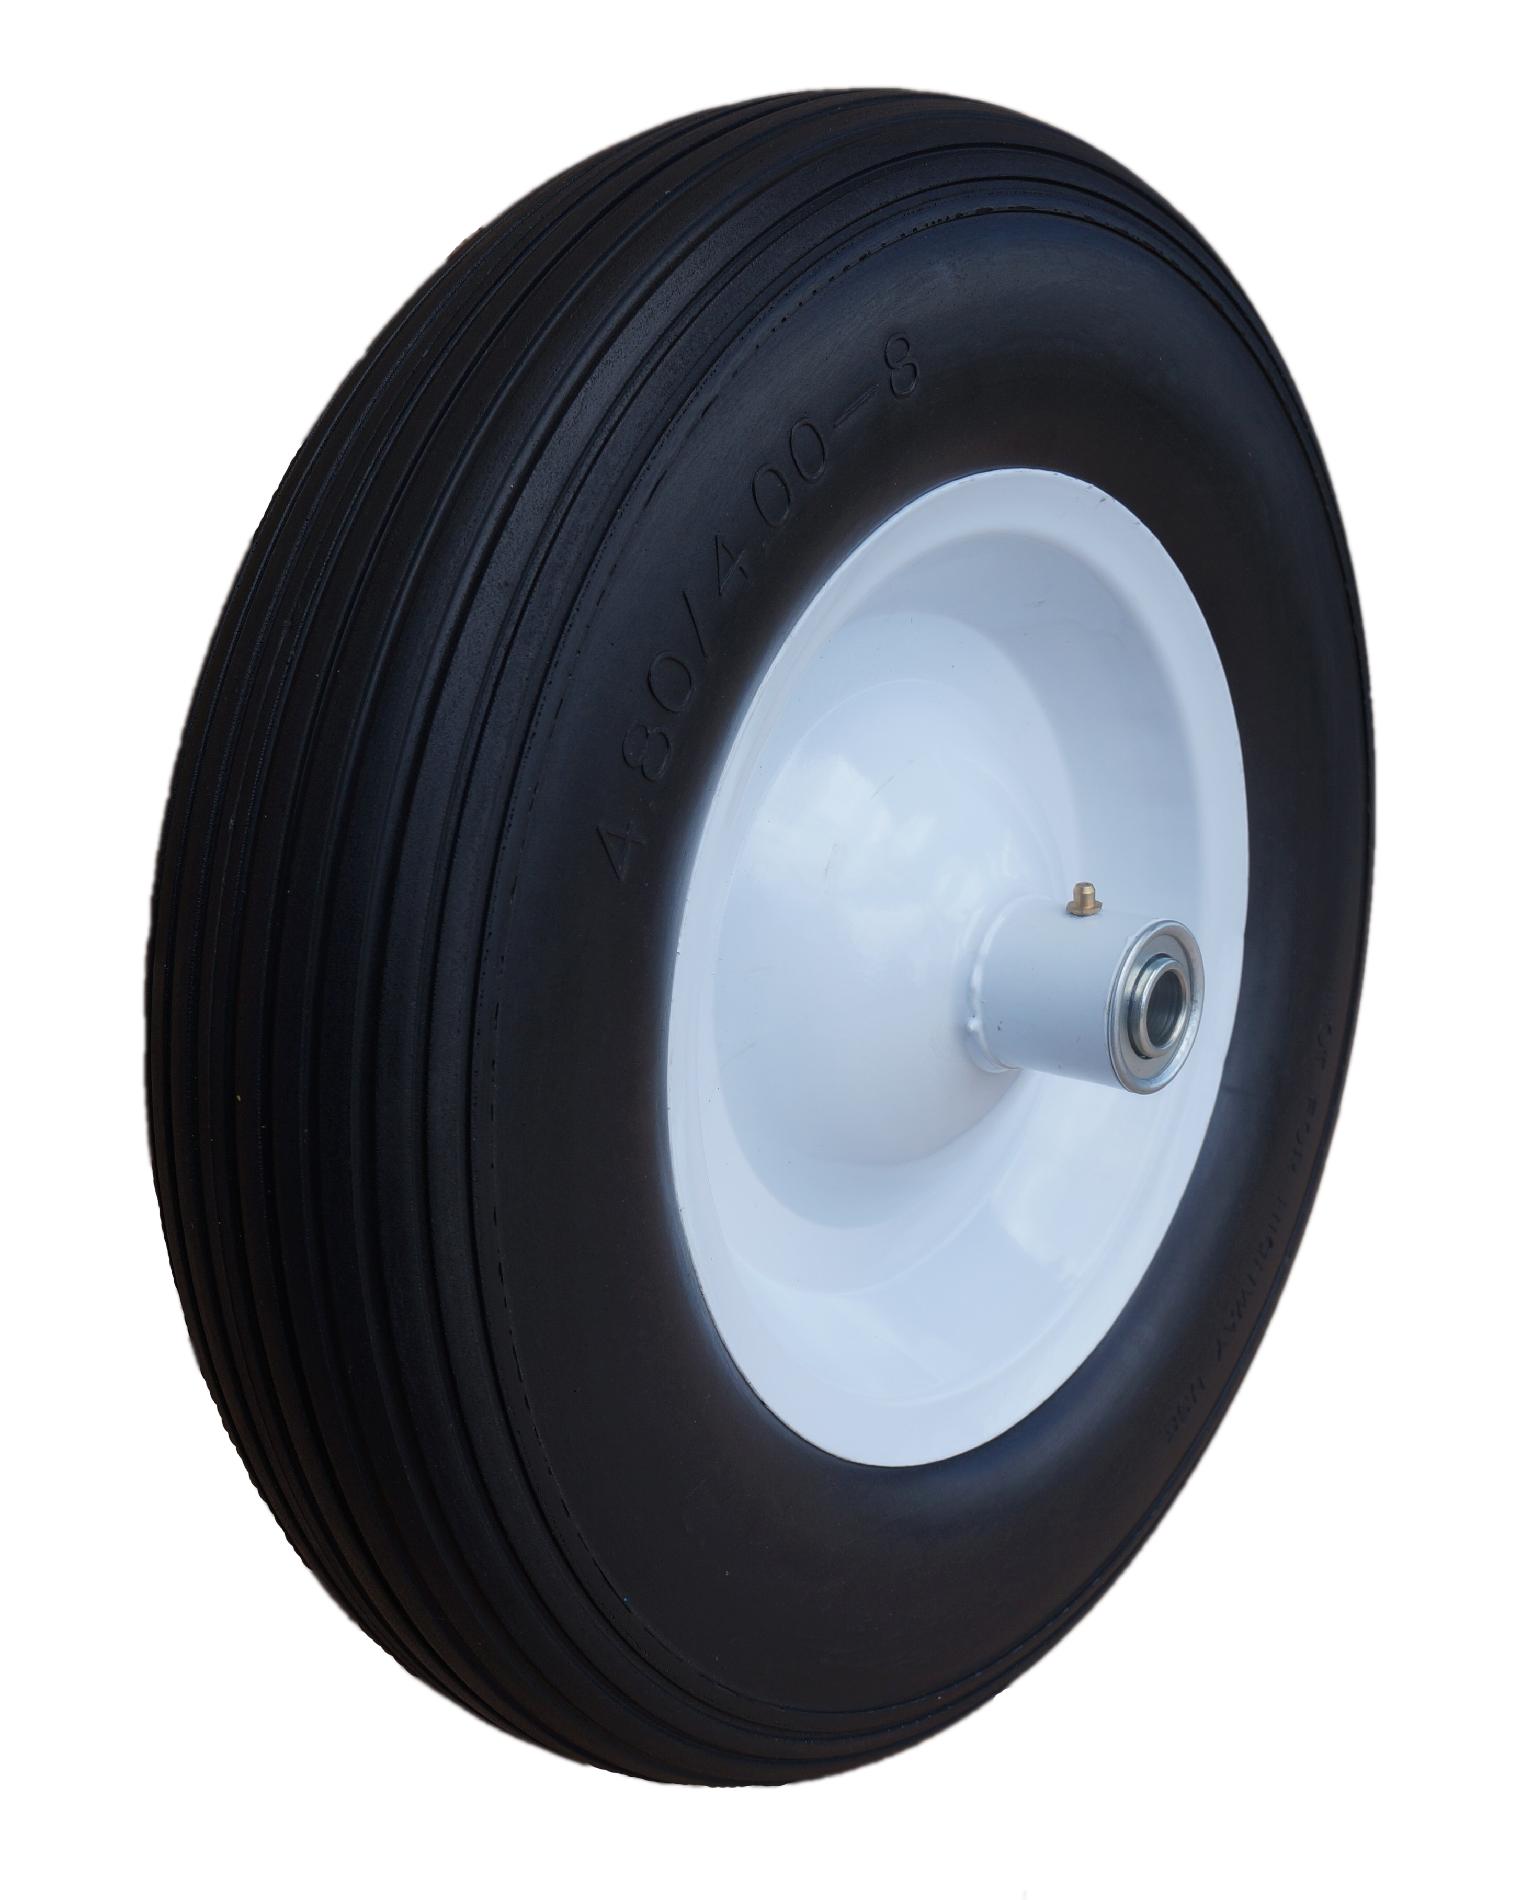 HI-RUN CT1001 Wheelbarrow Tire & Wheel 4.80/4.00-8 Flat Free